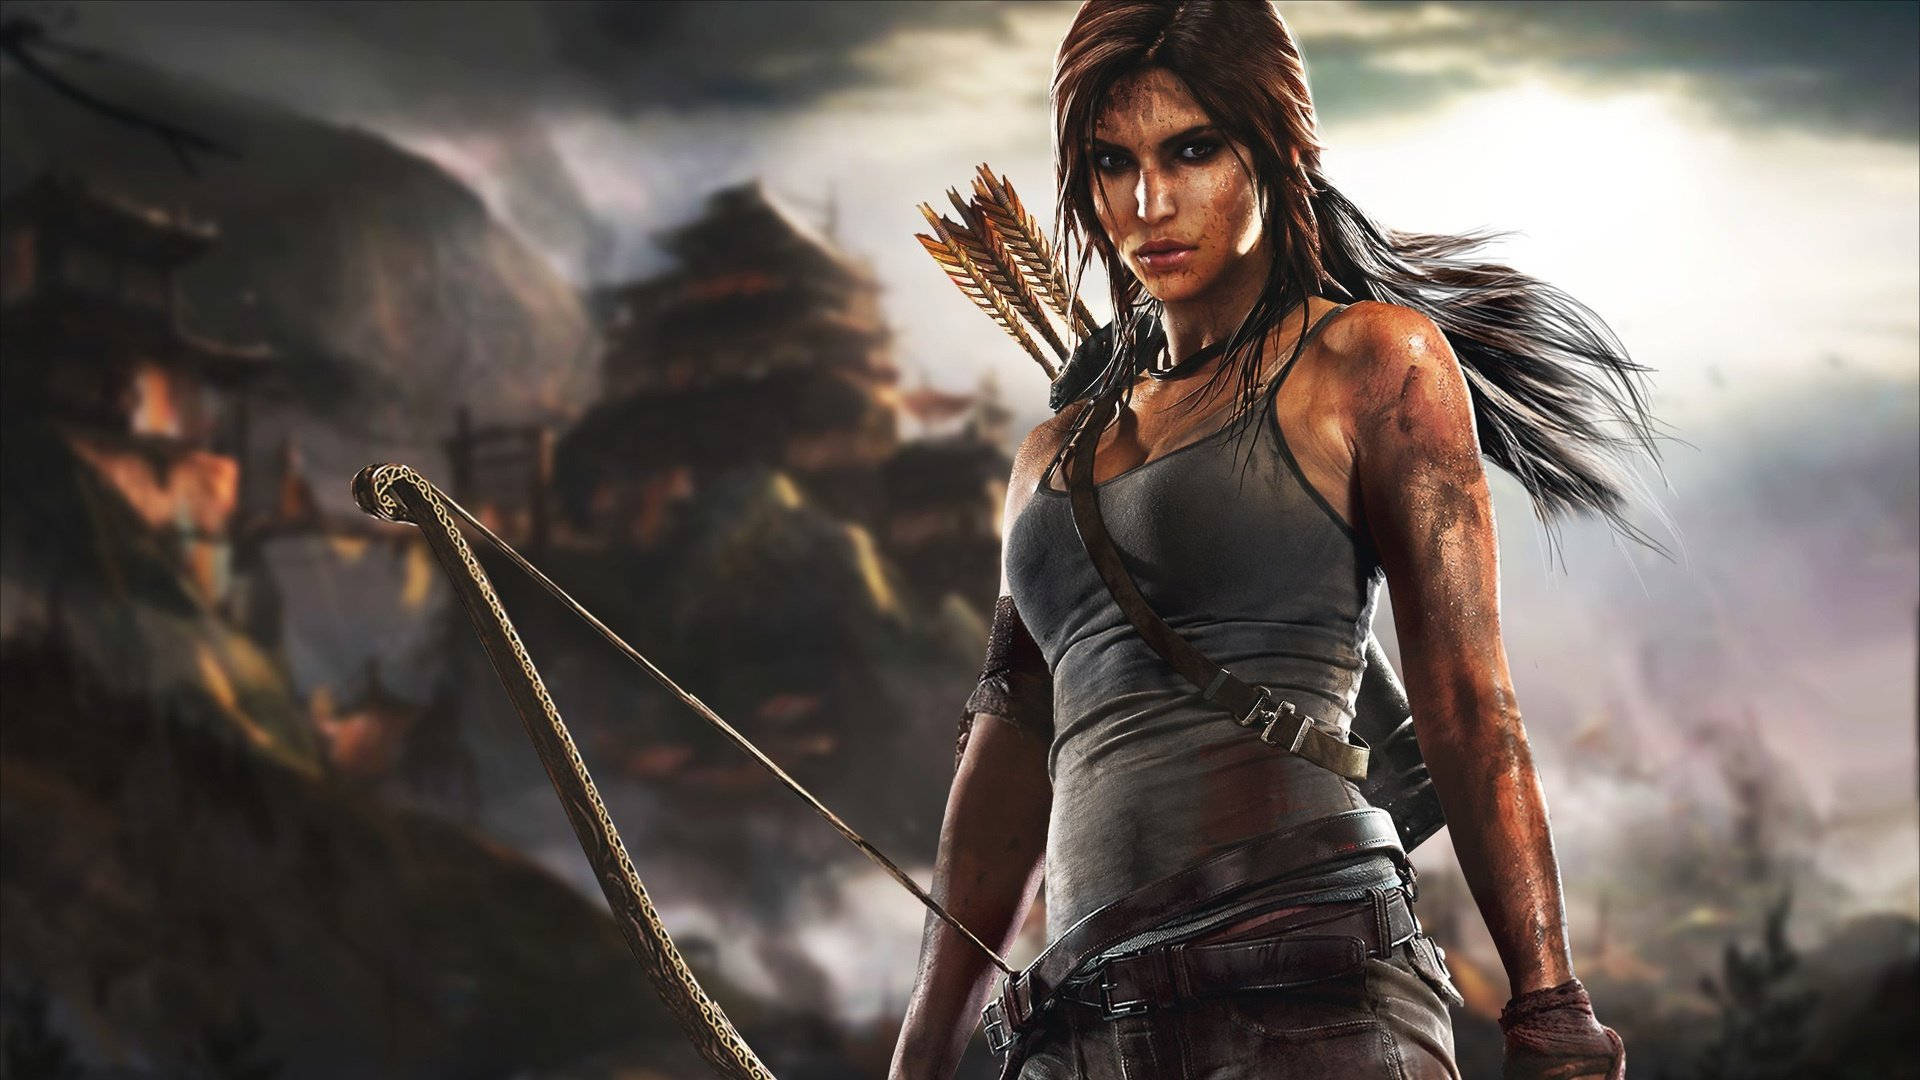 Descubrarelíquias Escondidas No Mundo Emocionante De Tomb Raider! Papel de Parede